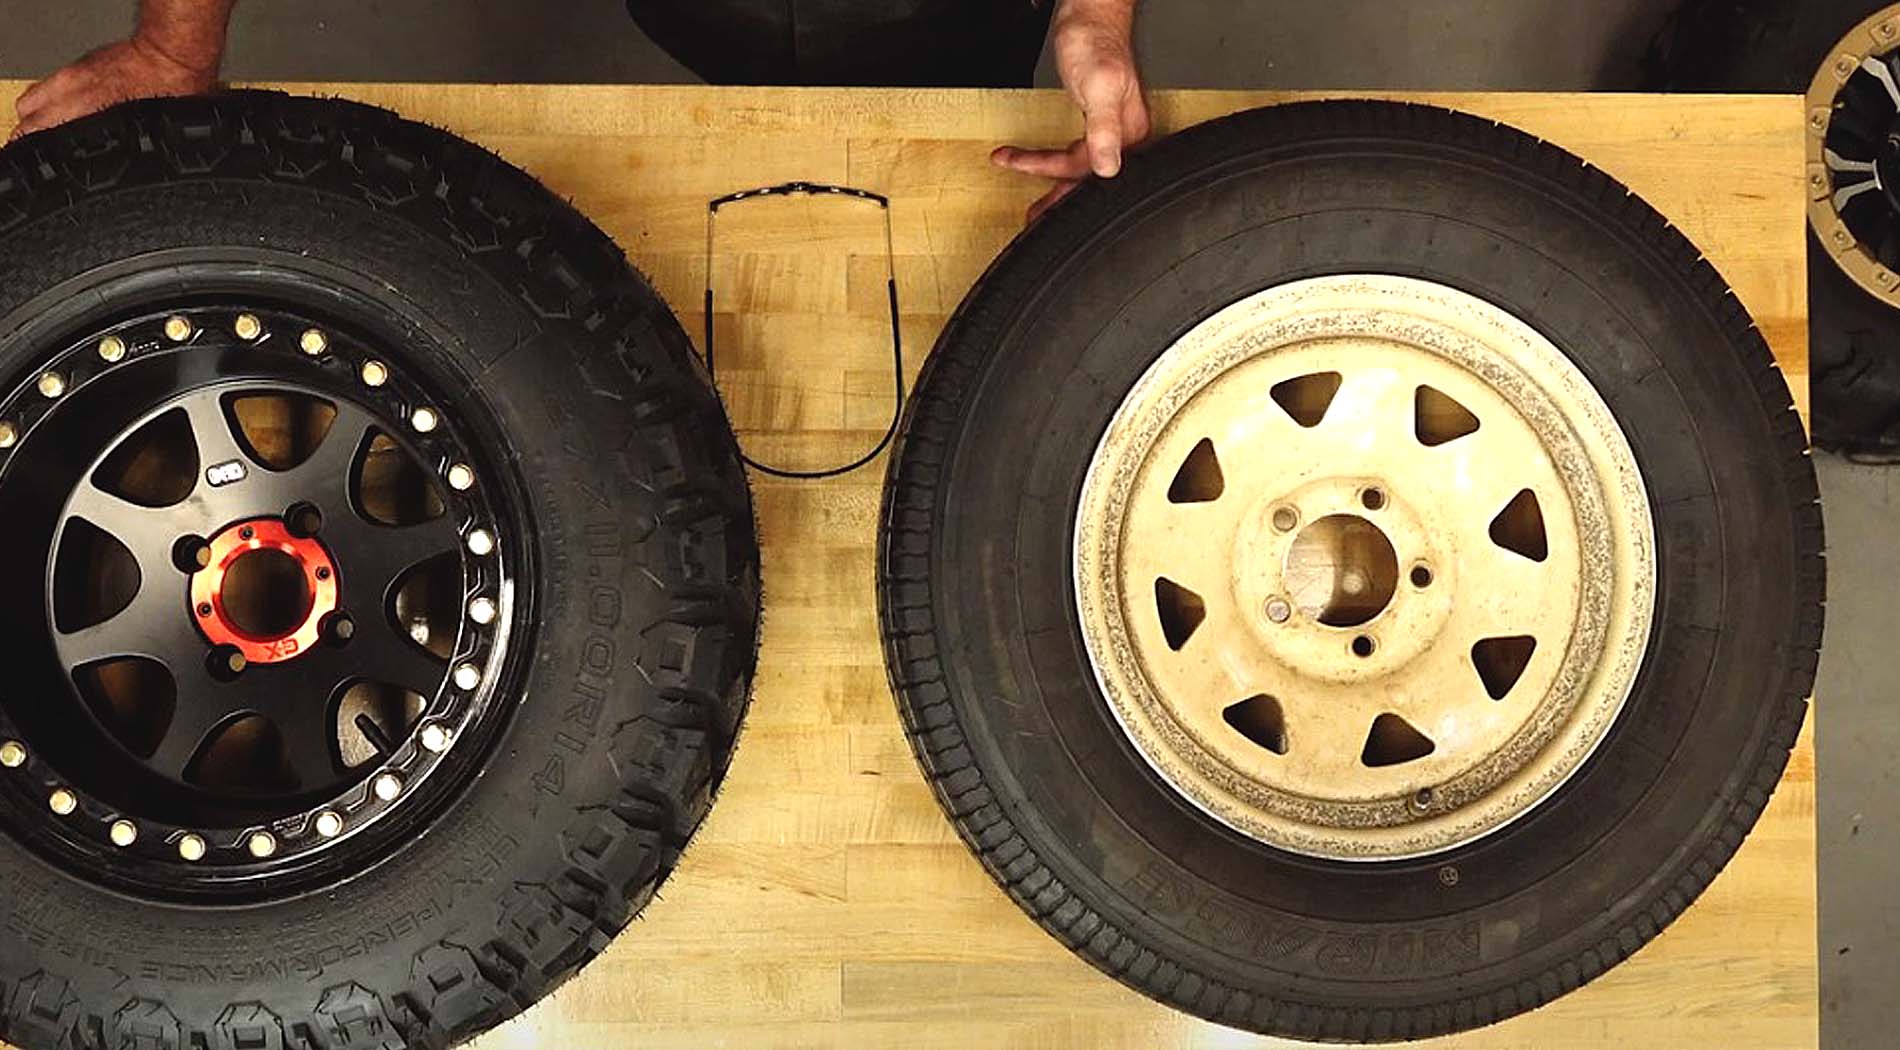 Metric size tire vs standard size offroad tire